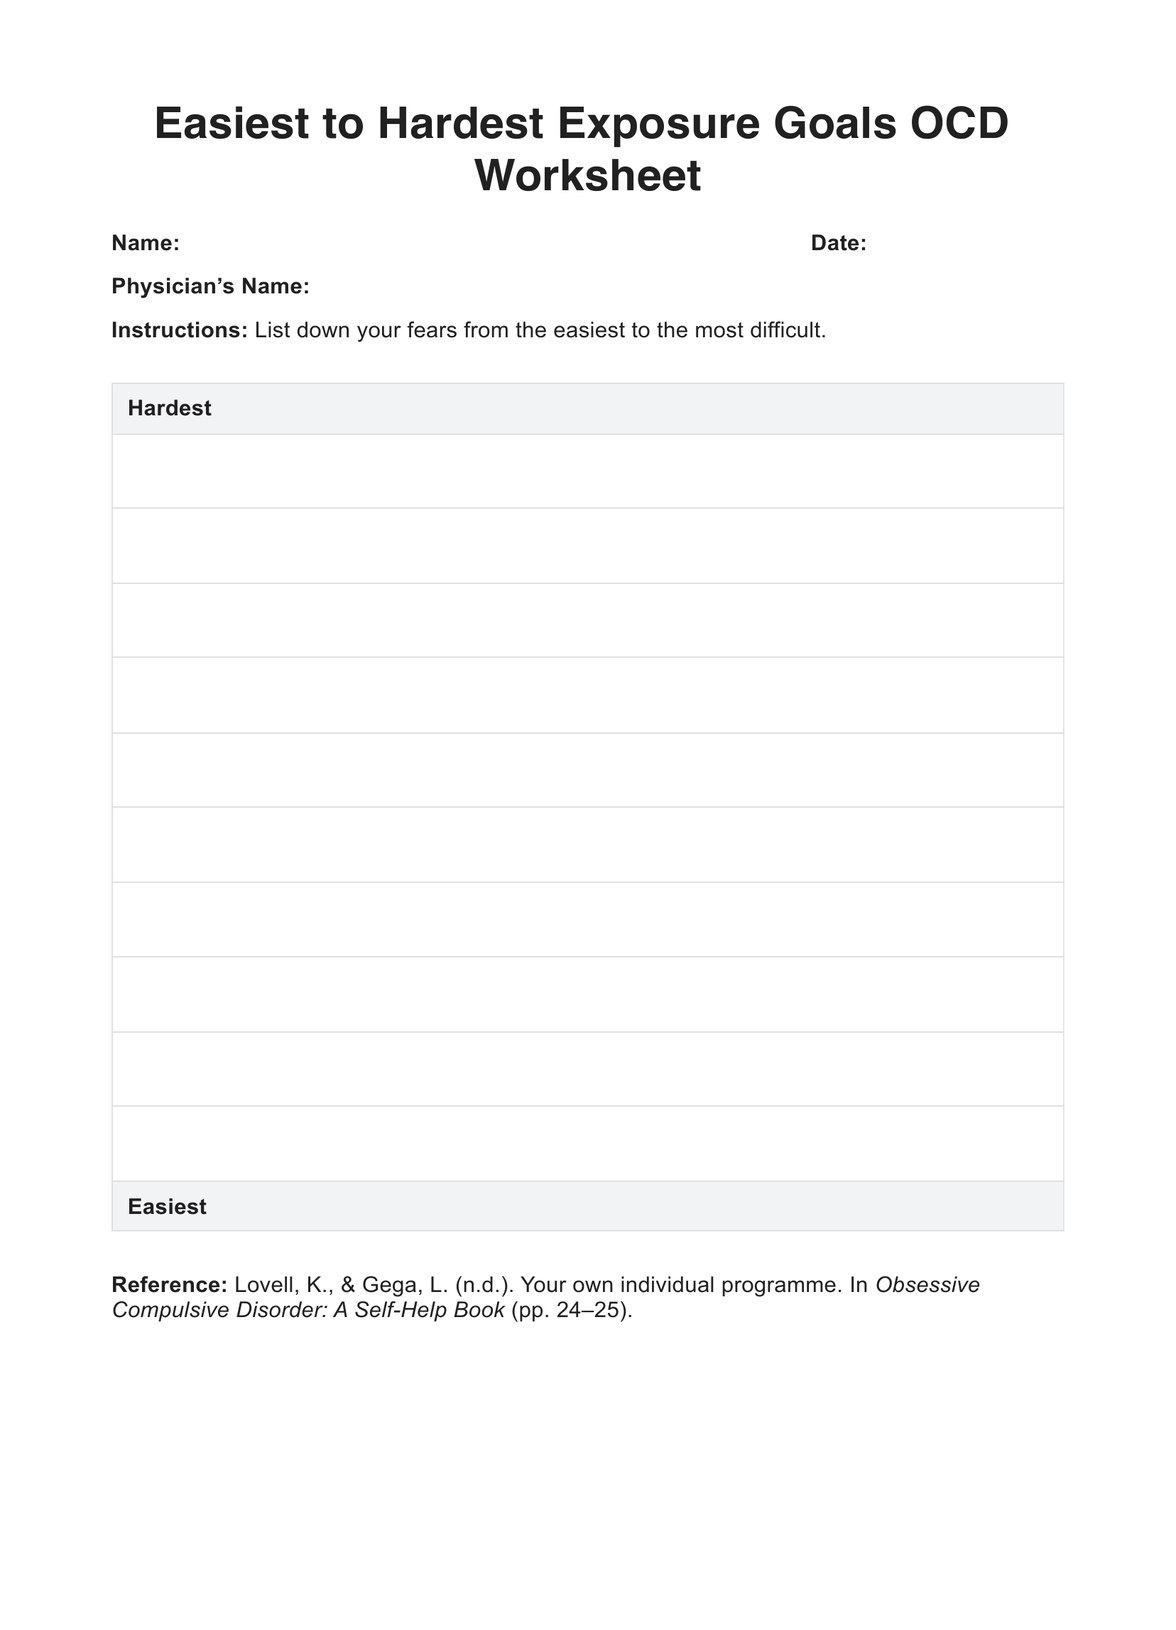 Exposure Goals OCD Worksheet PDF Example